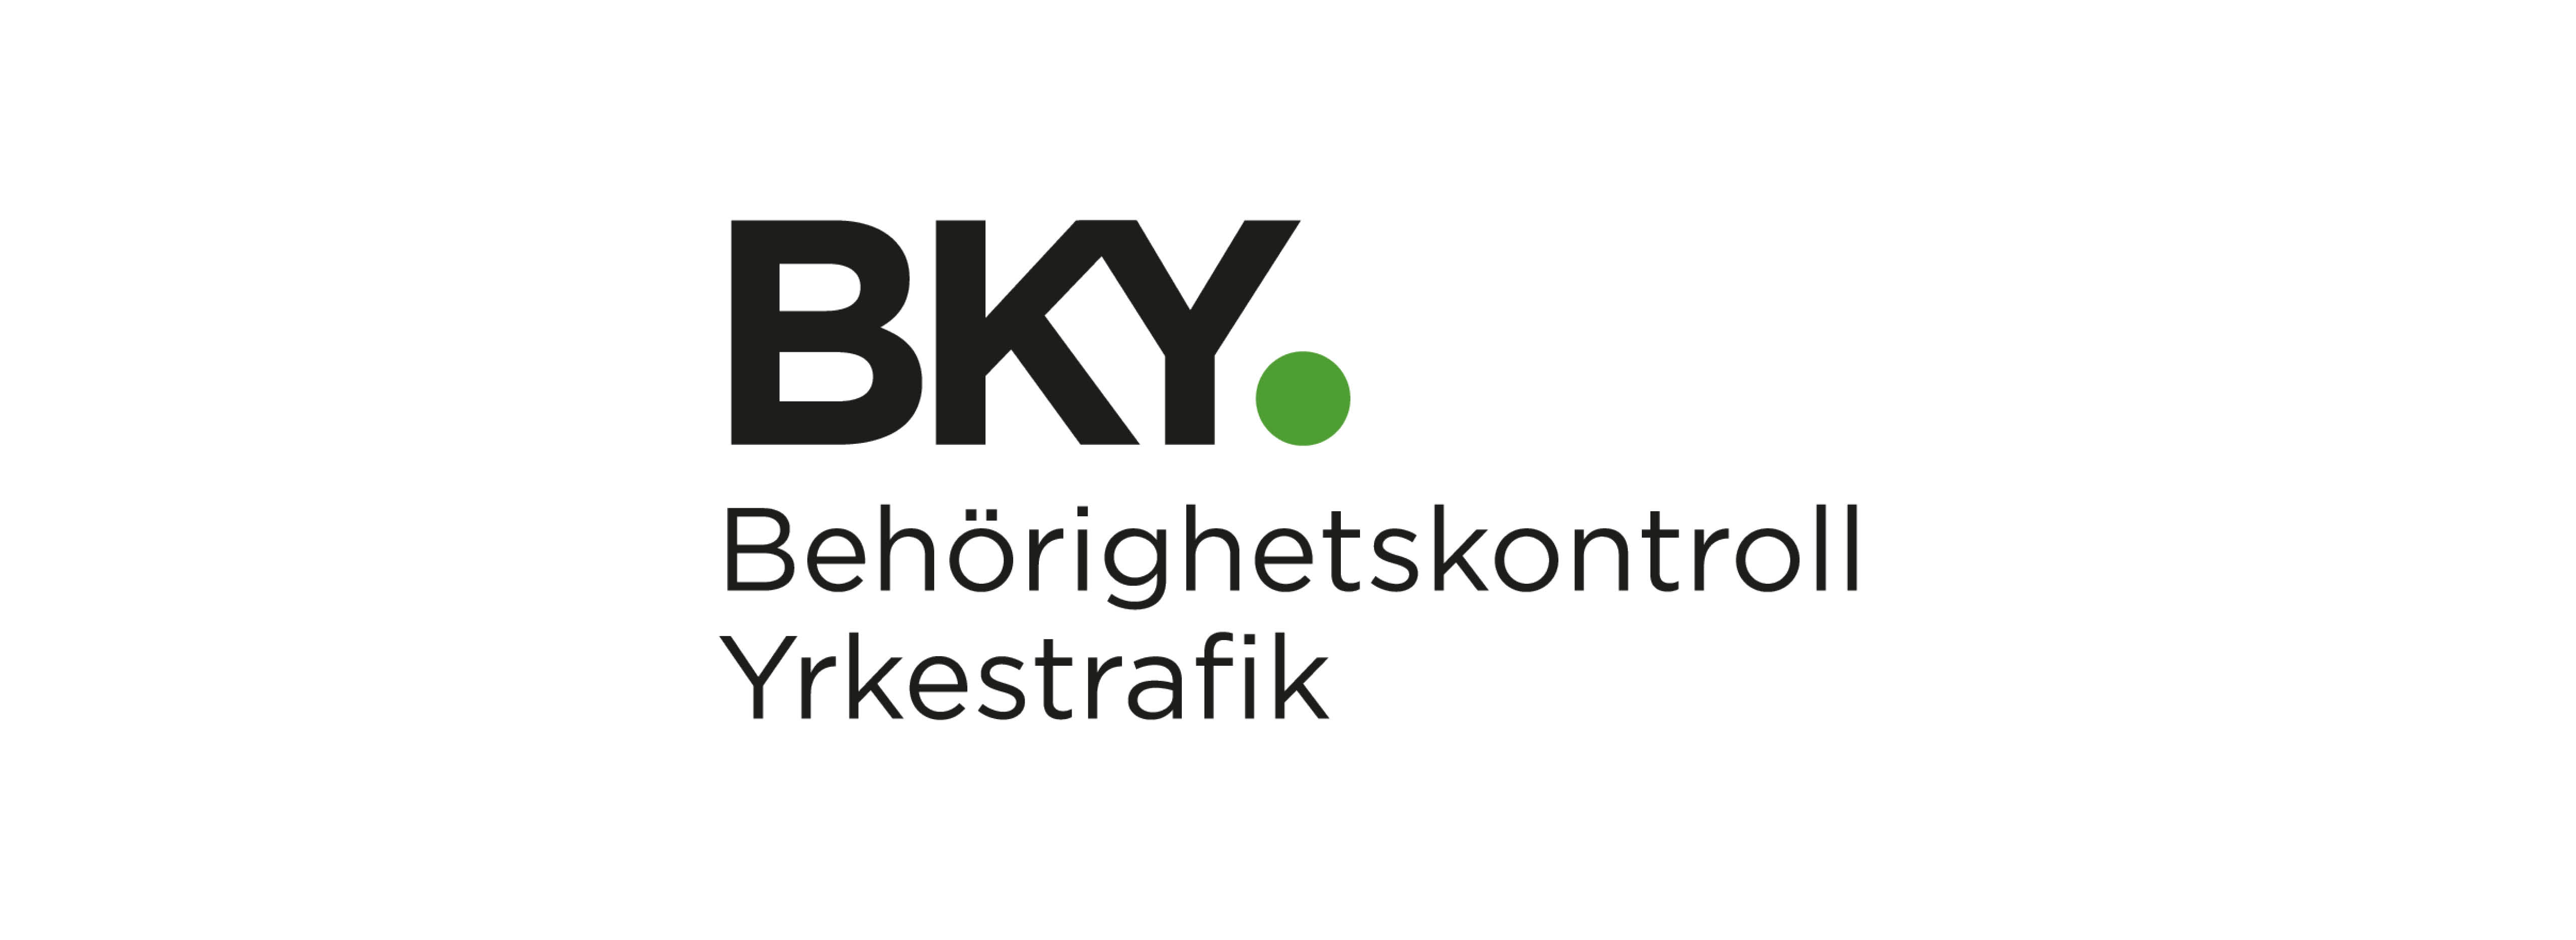 BKY Sveriges Åkeriföretag